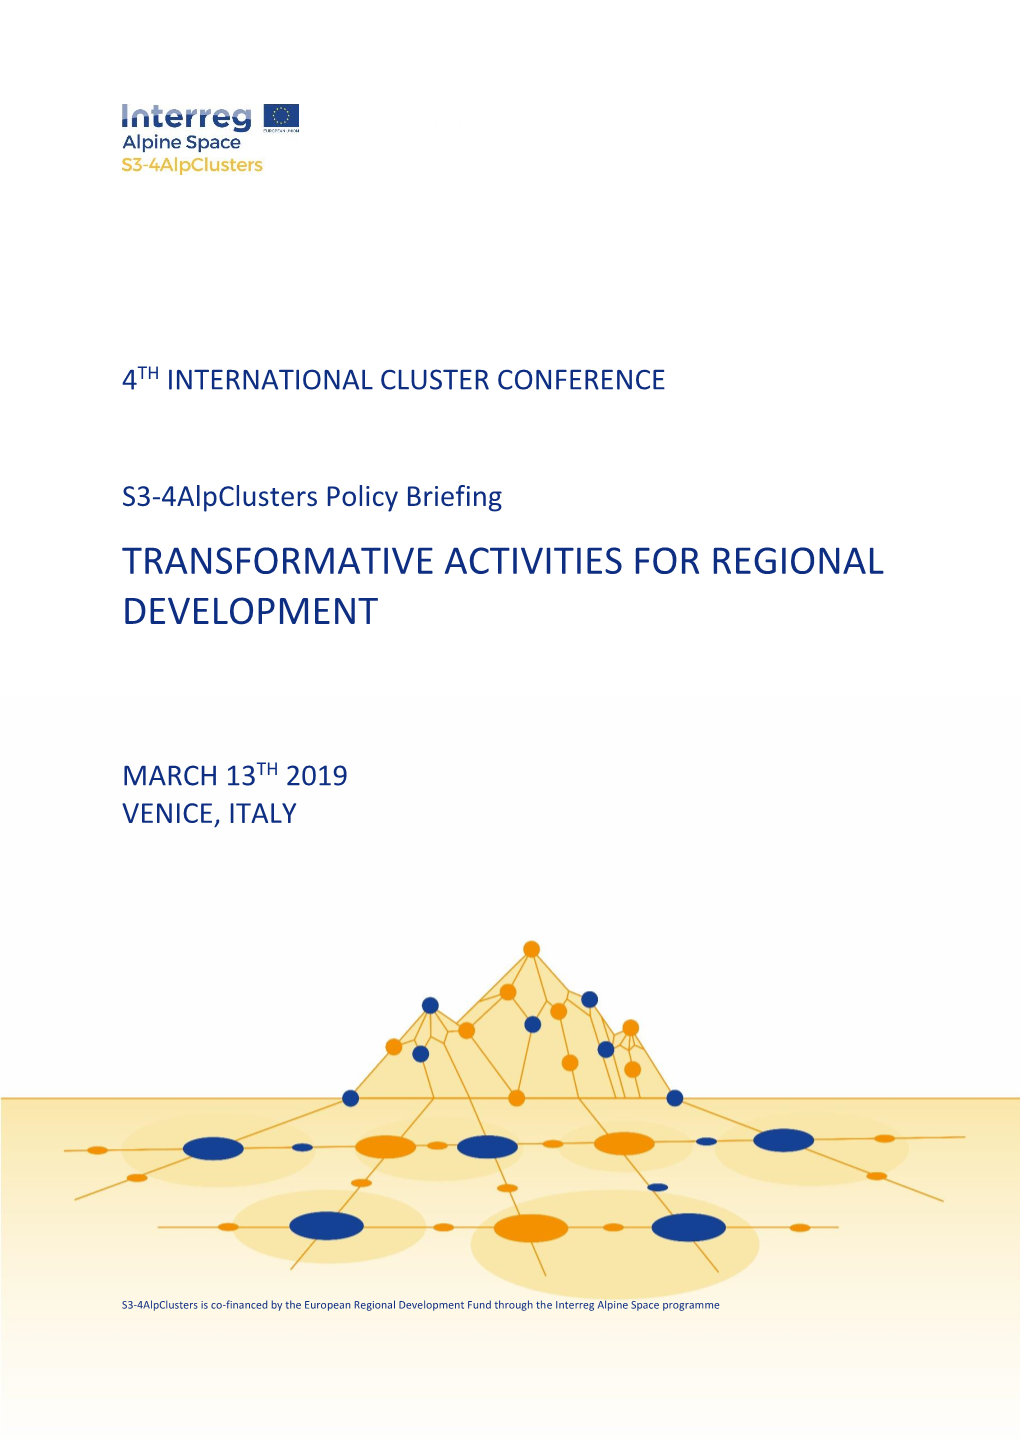 Transformative Activities for Regional Development